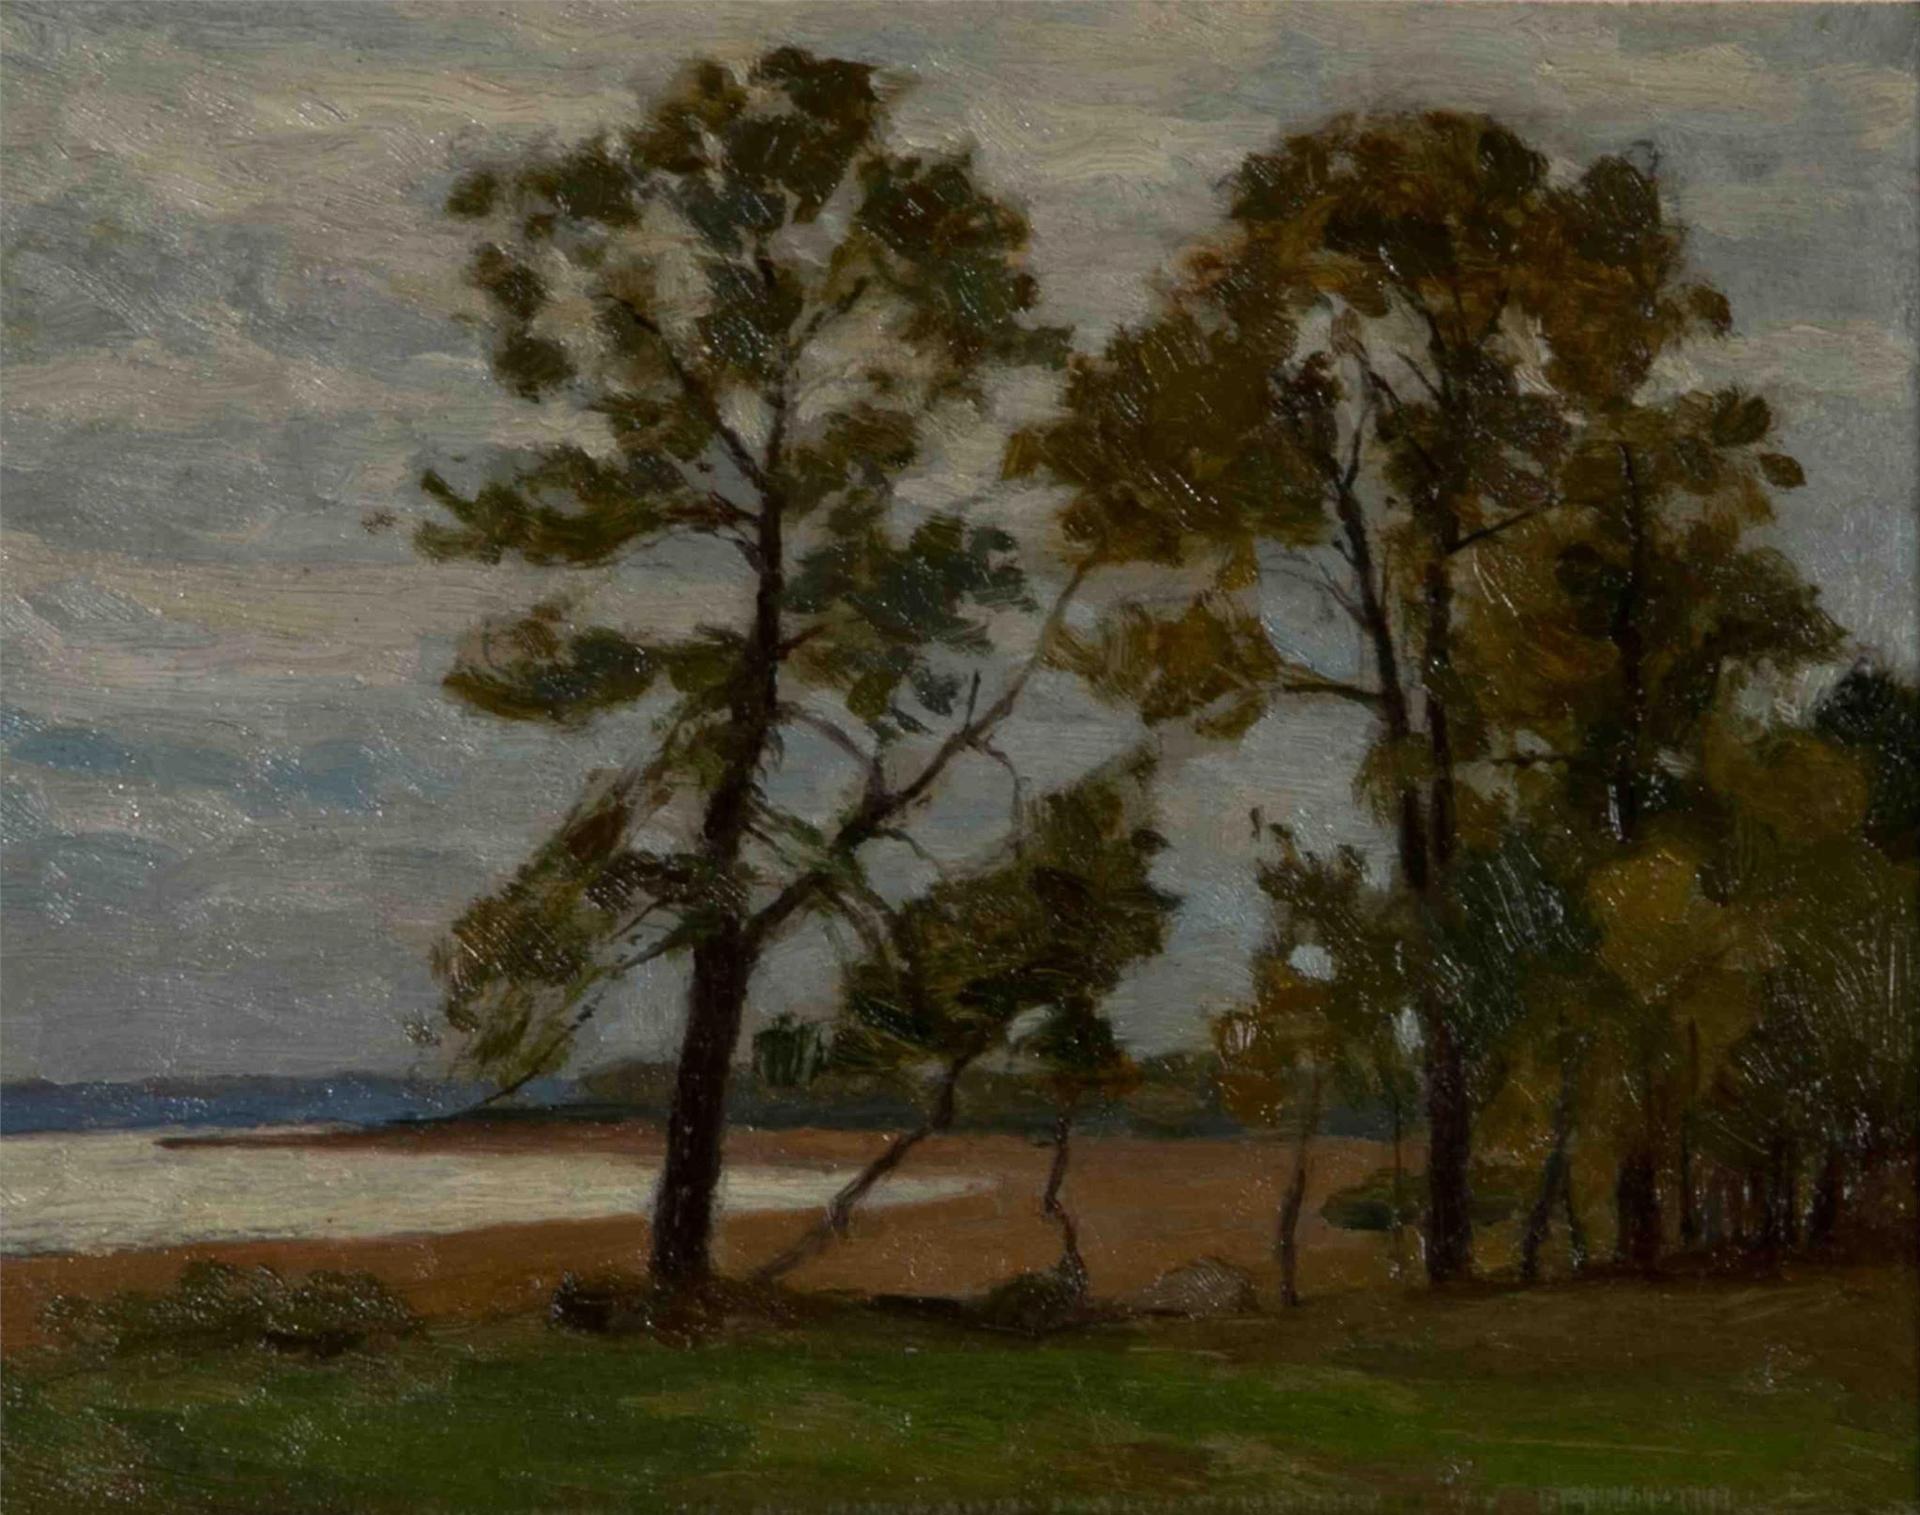 William Brymner (1855-1925) - Summer Landscape